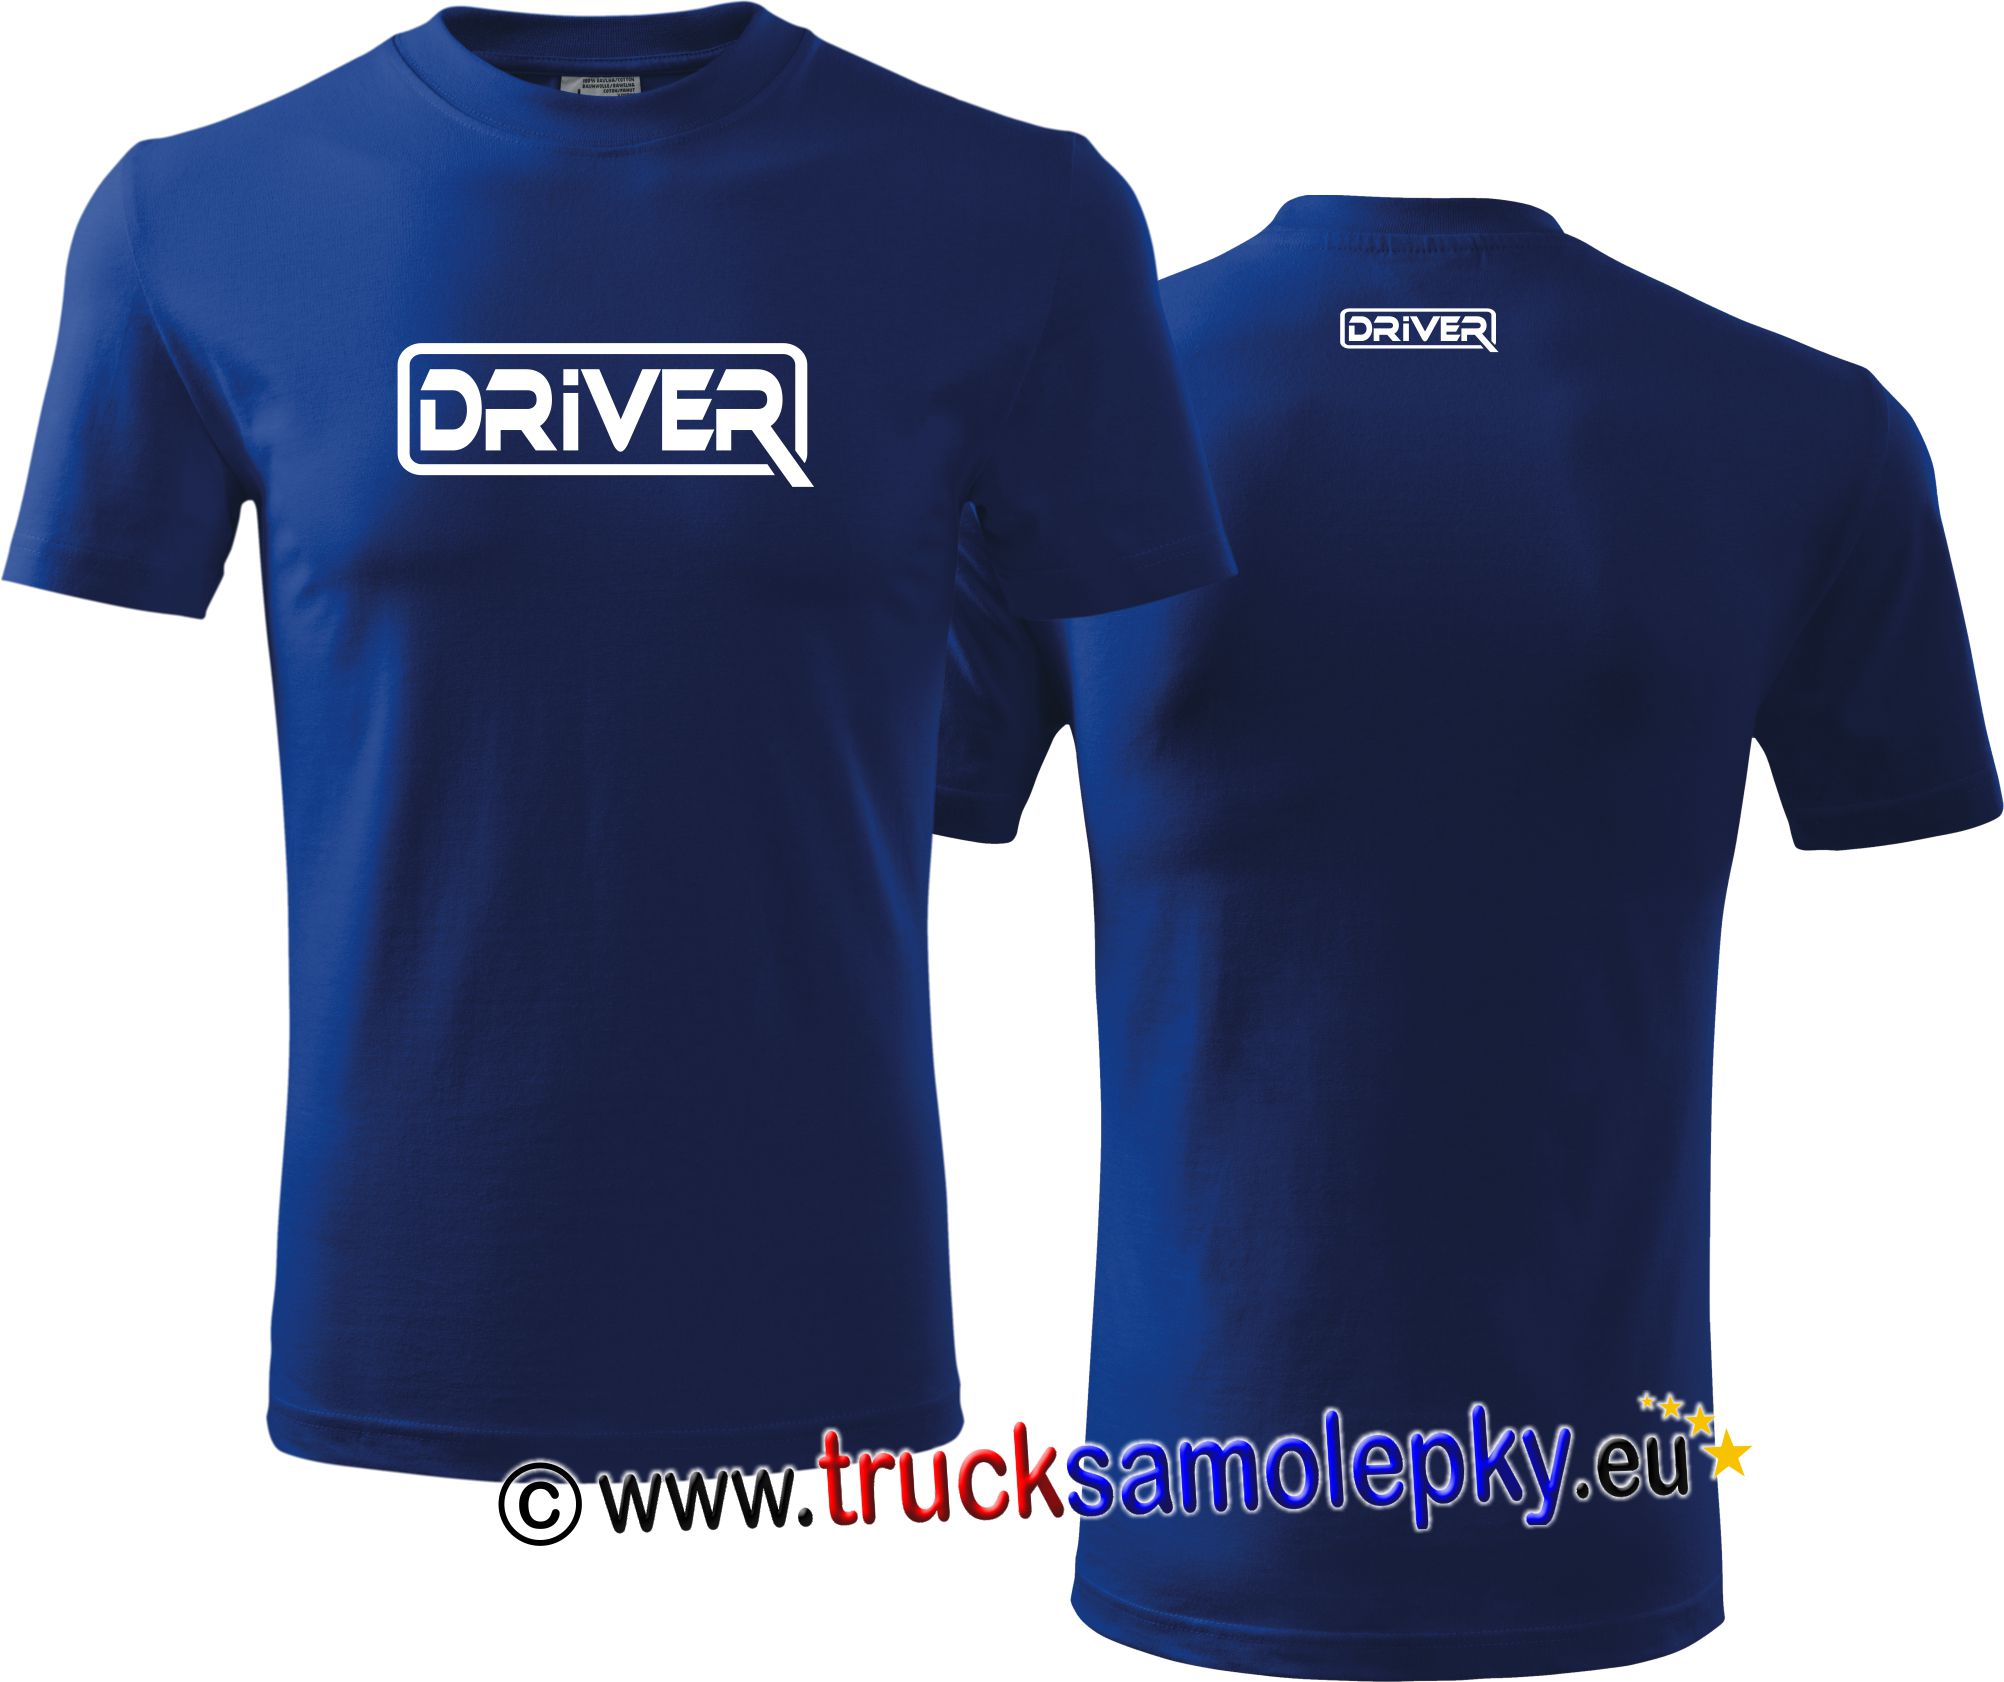 Truck tričko DRIVER v barvě modré